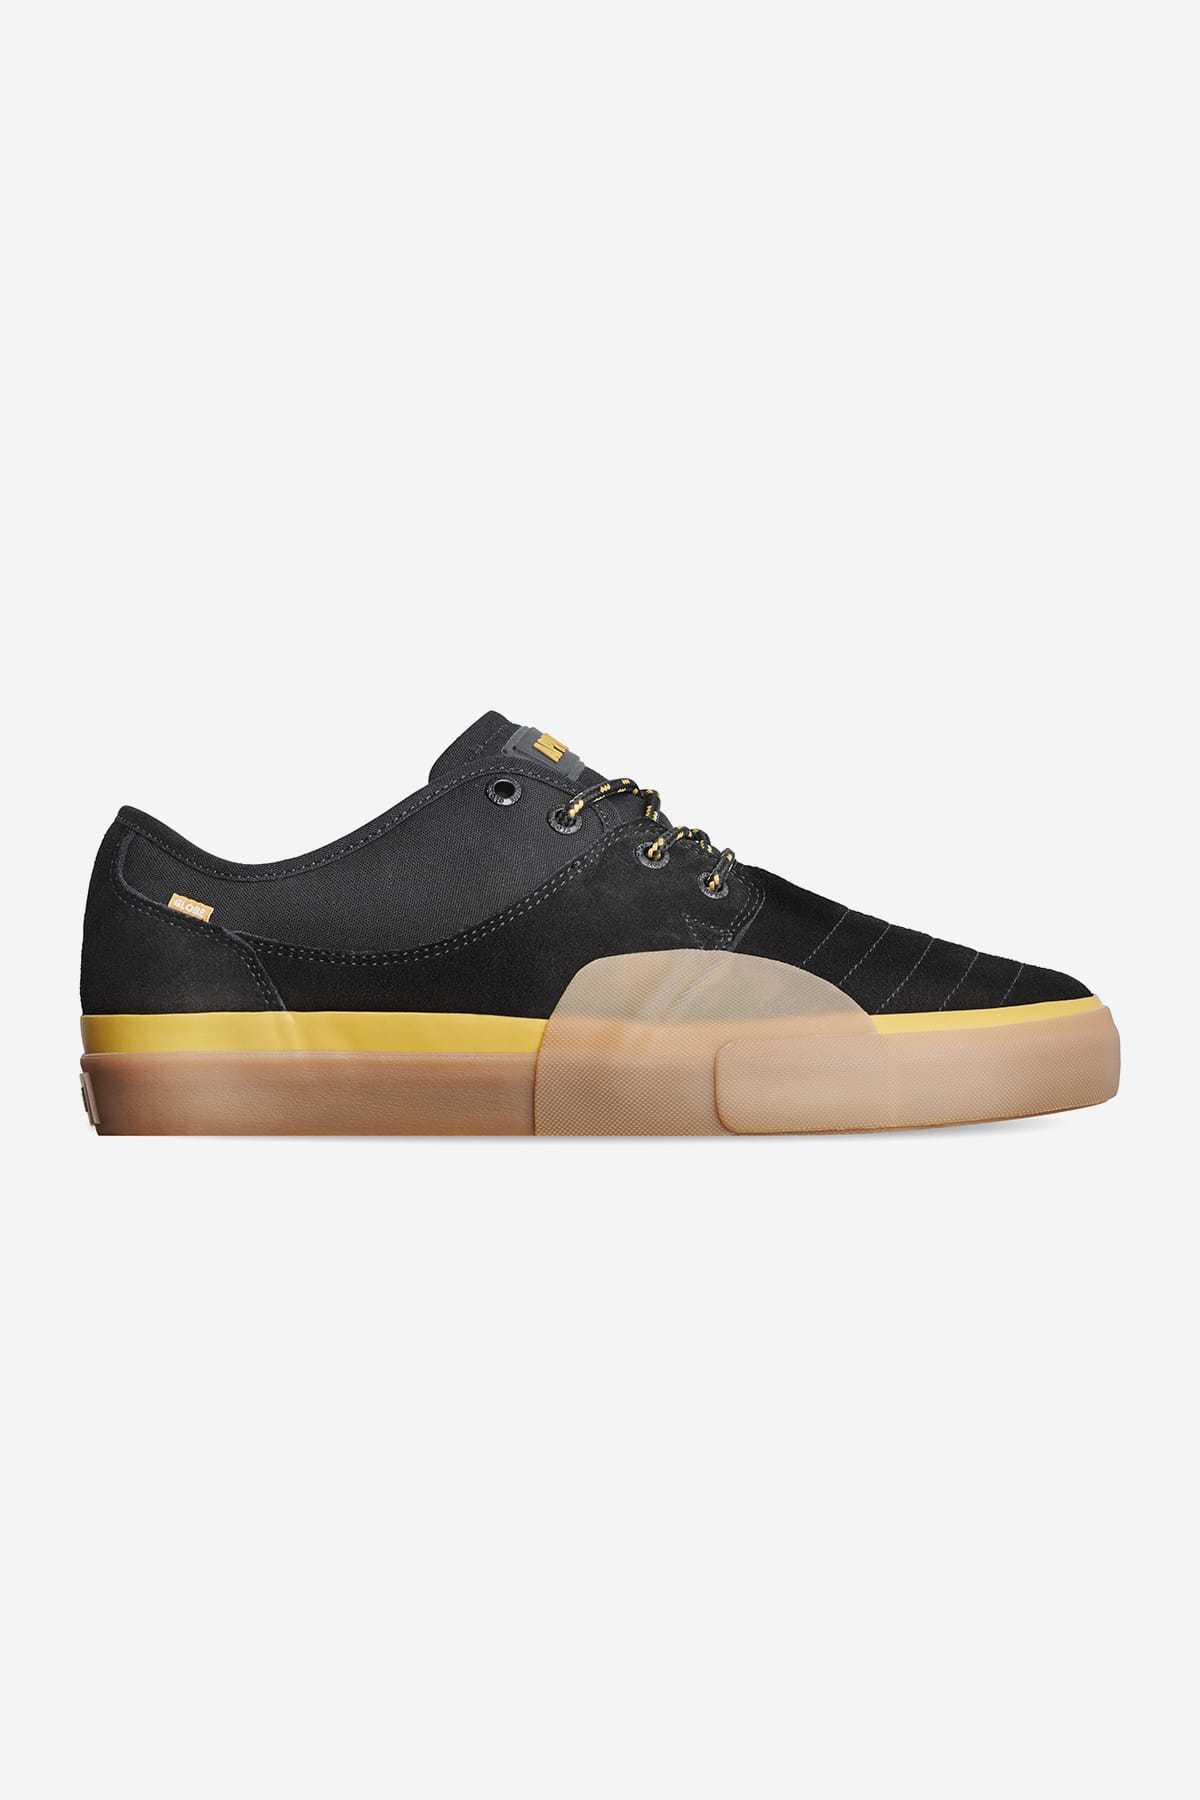 Globe - Mahalo Plus - Black/Mustard - skateboard Chaussures